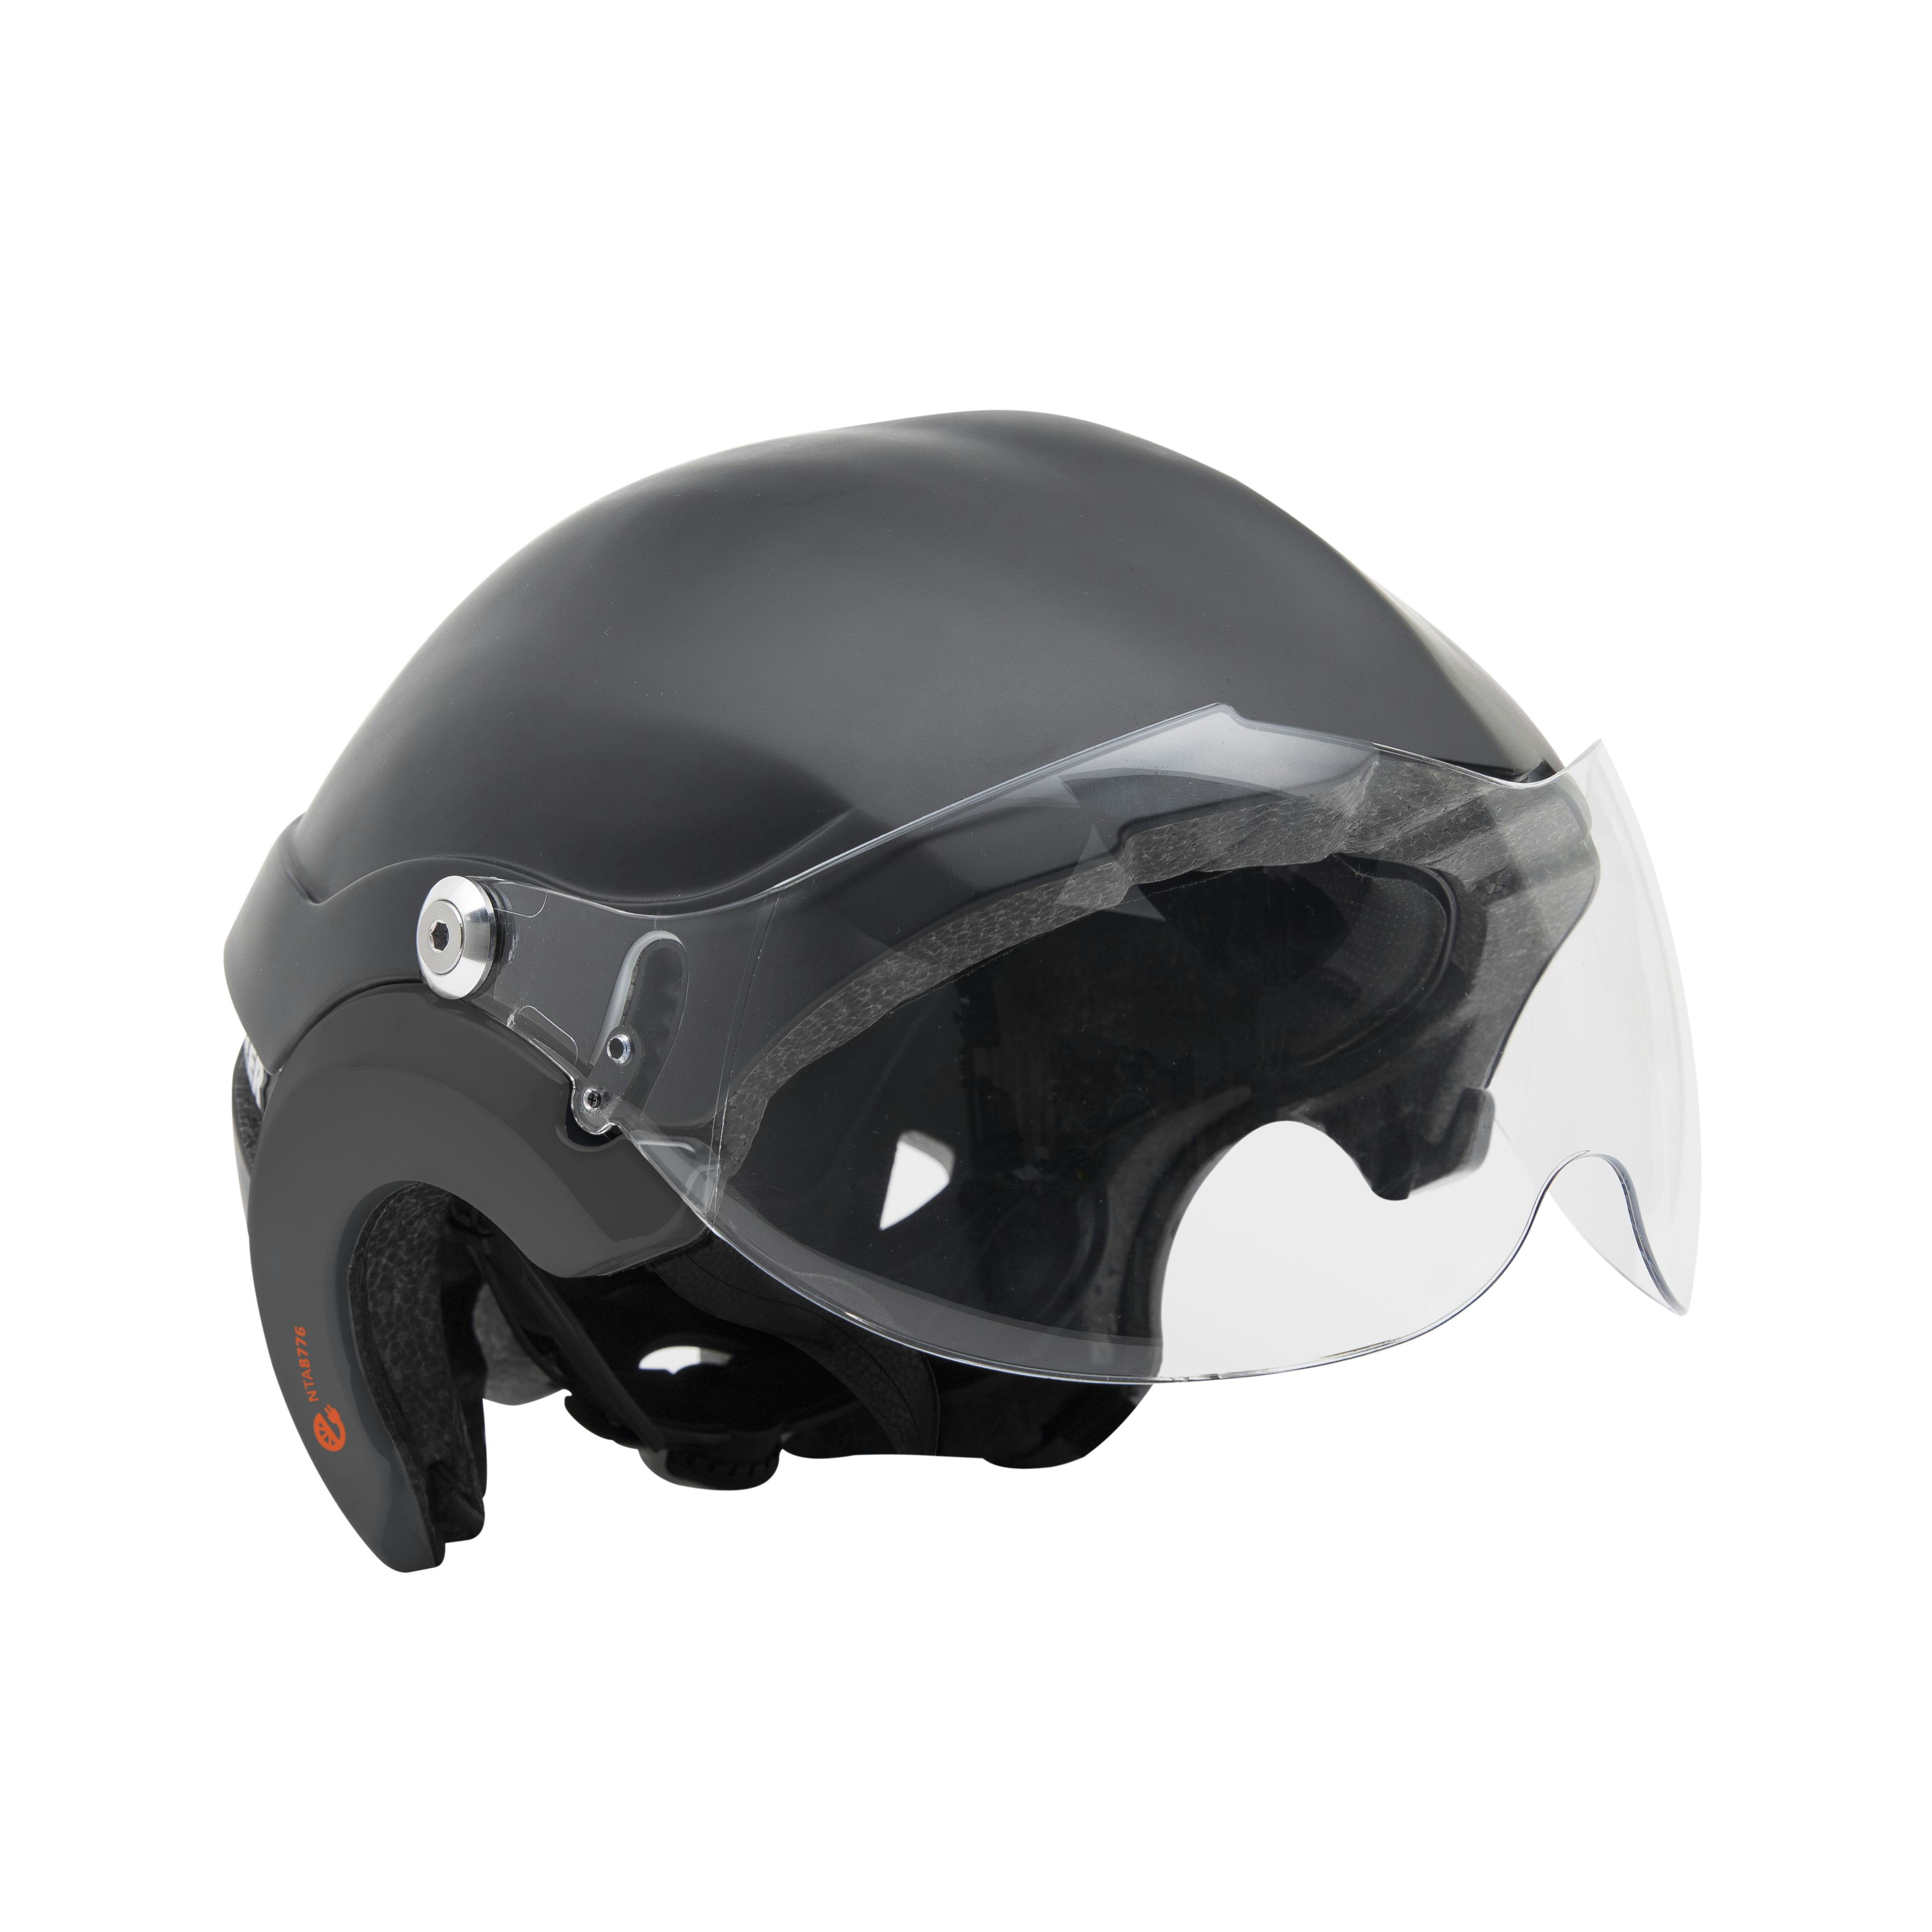 Gezond Mail onszelf Lazer's Latest Speed Pedelec Dedicated Helmets